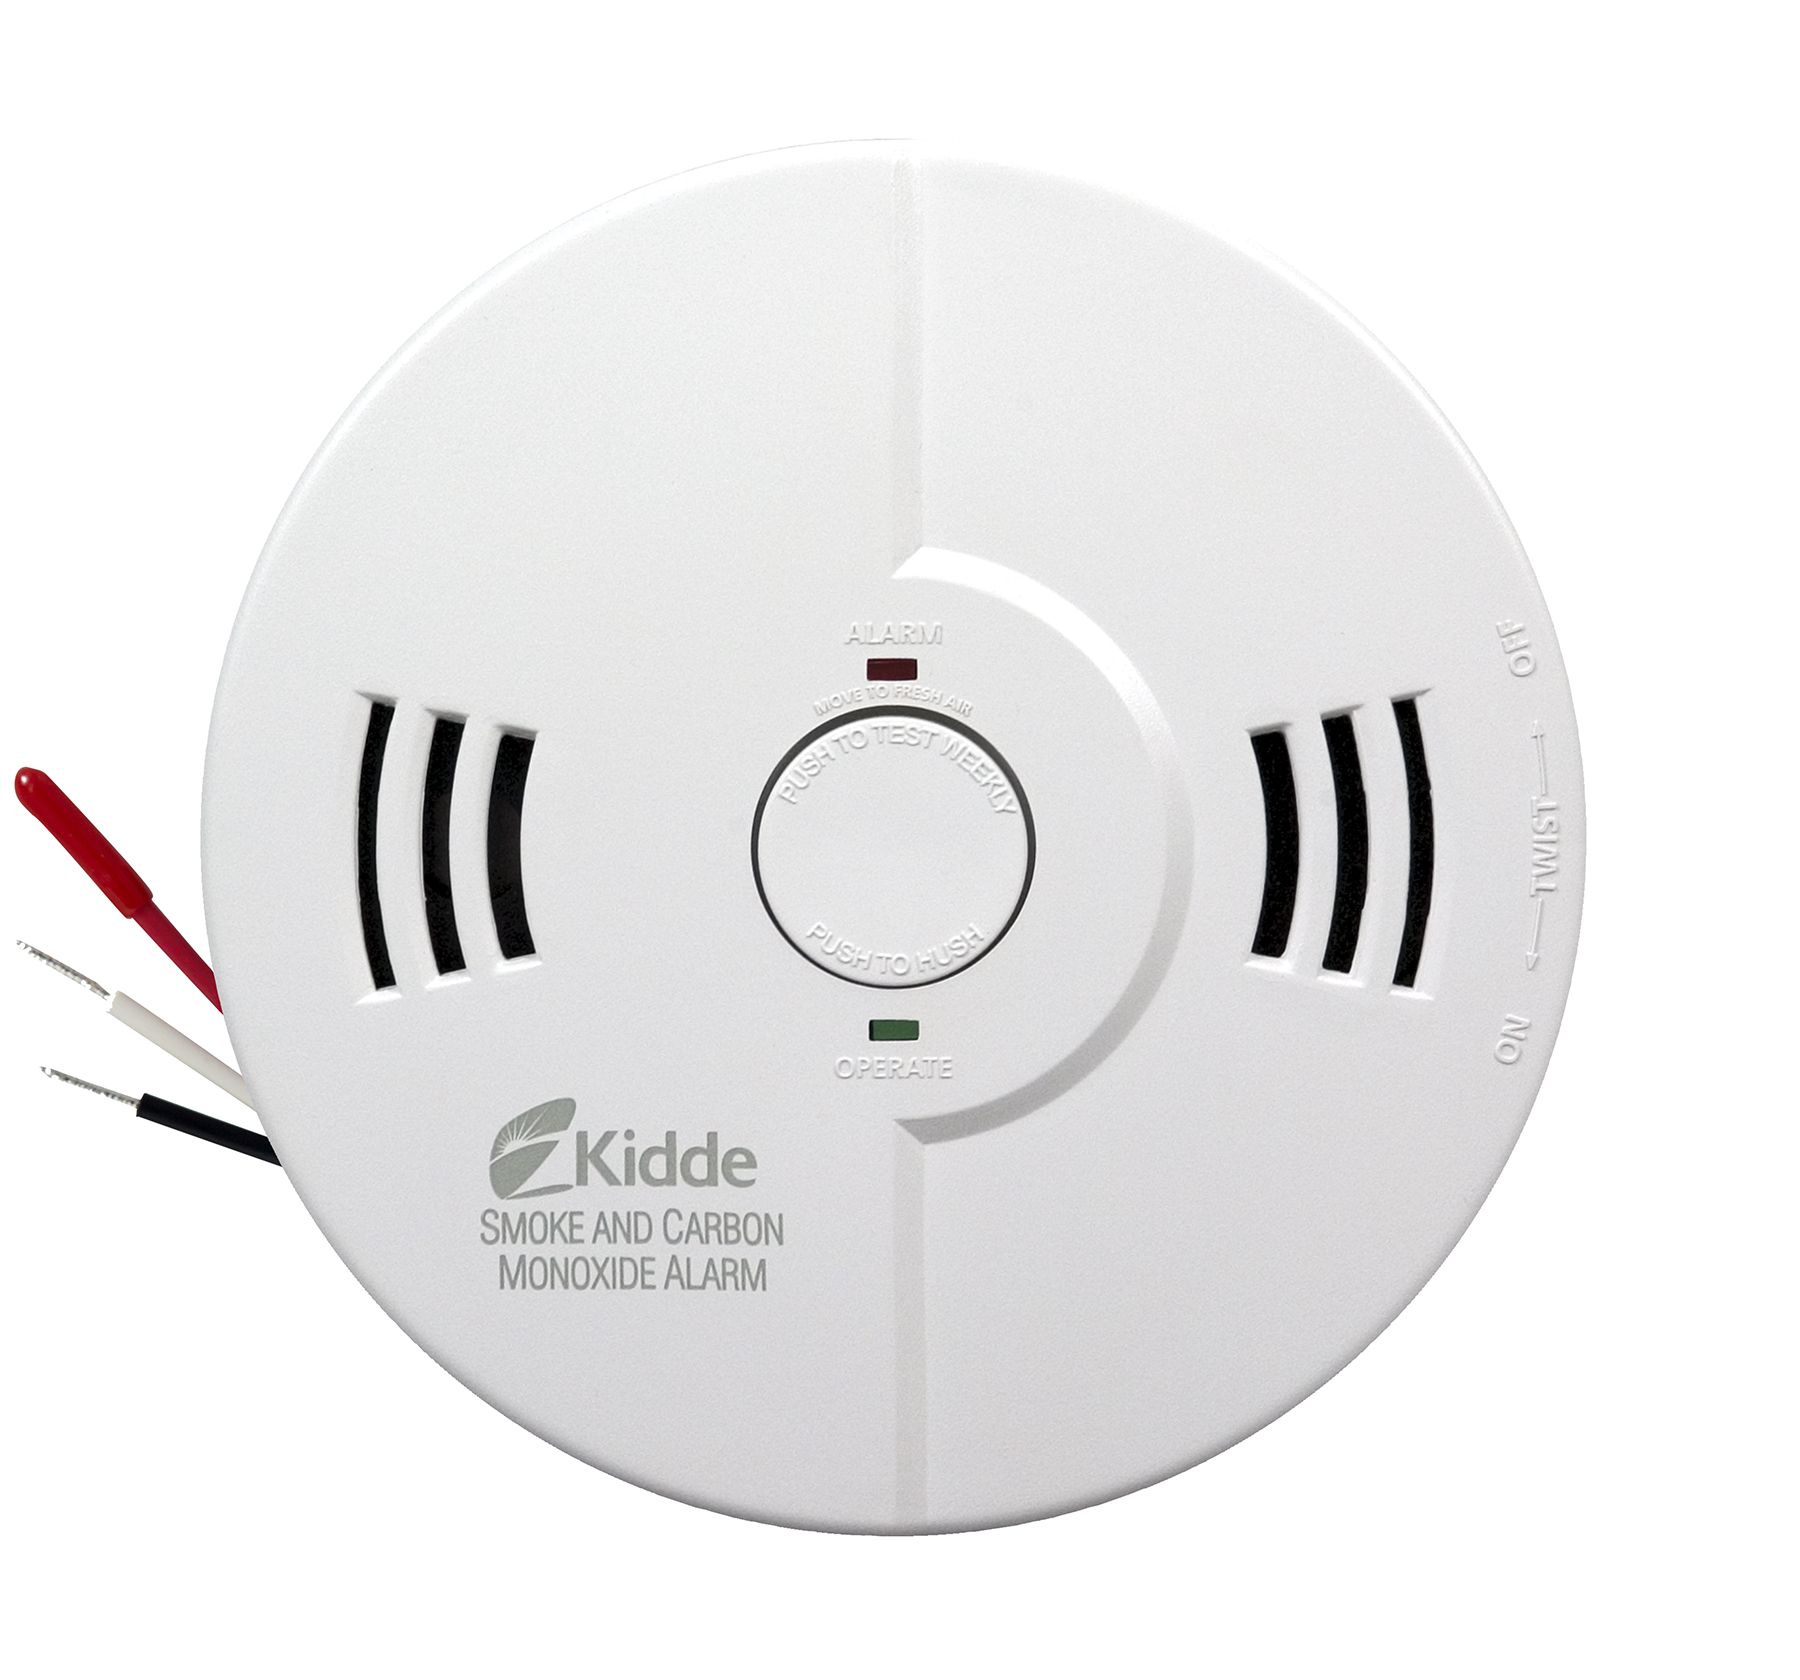 Kidde NightHawk combination smoke/carbon monoxide (CO) alarms